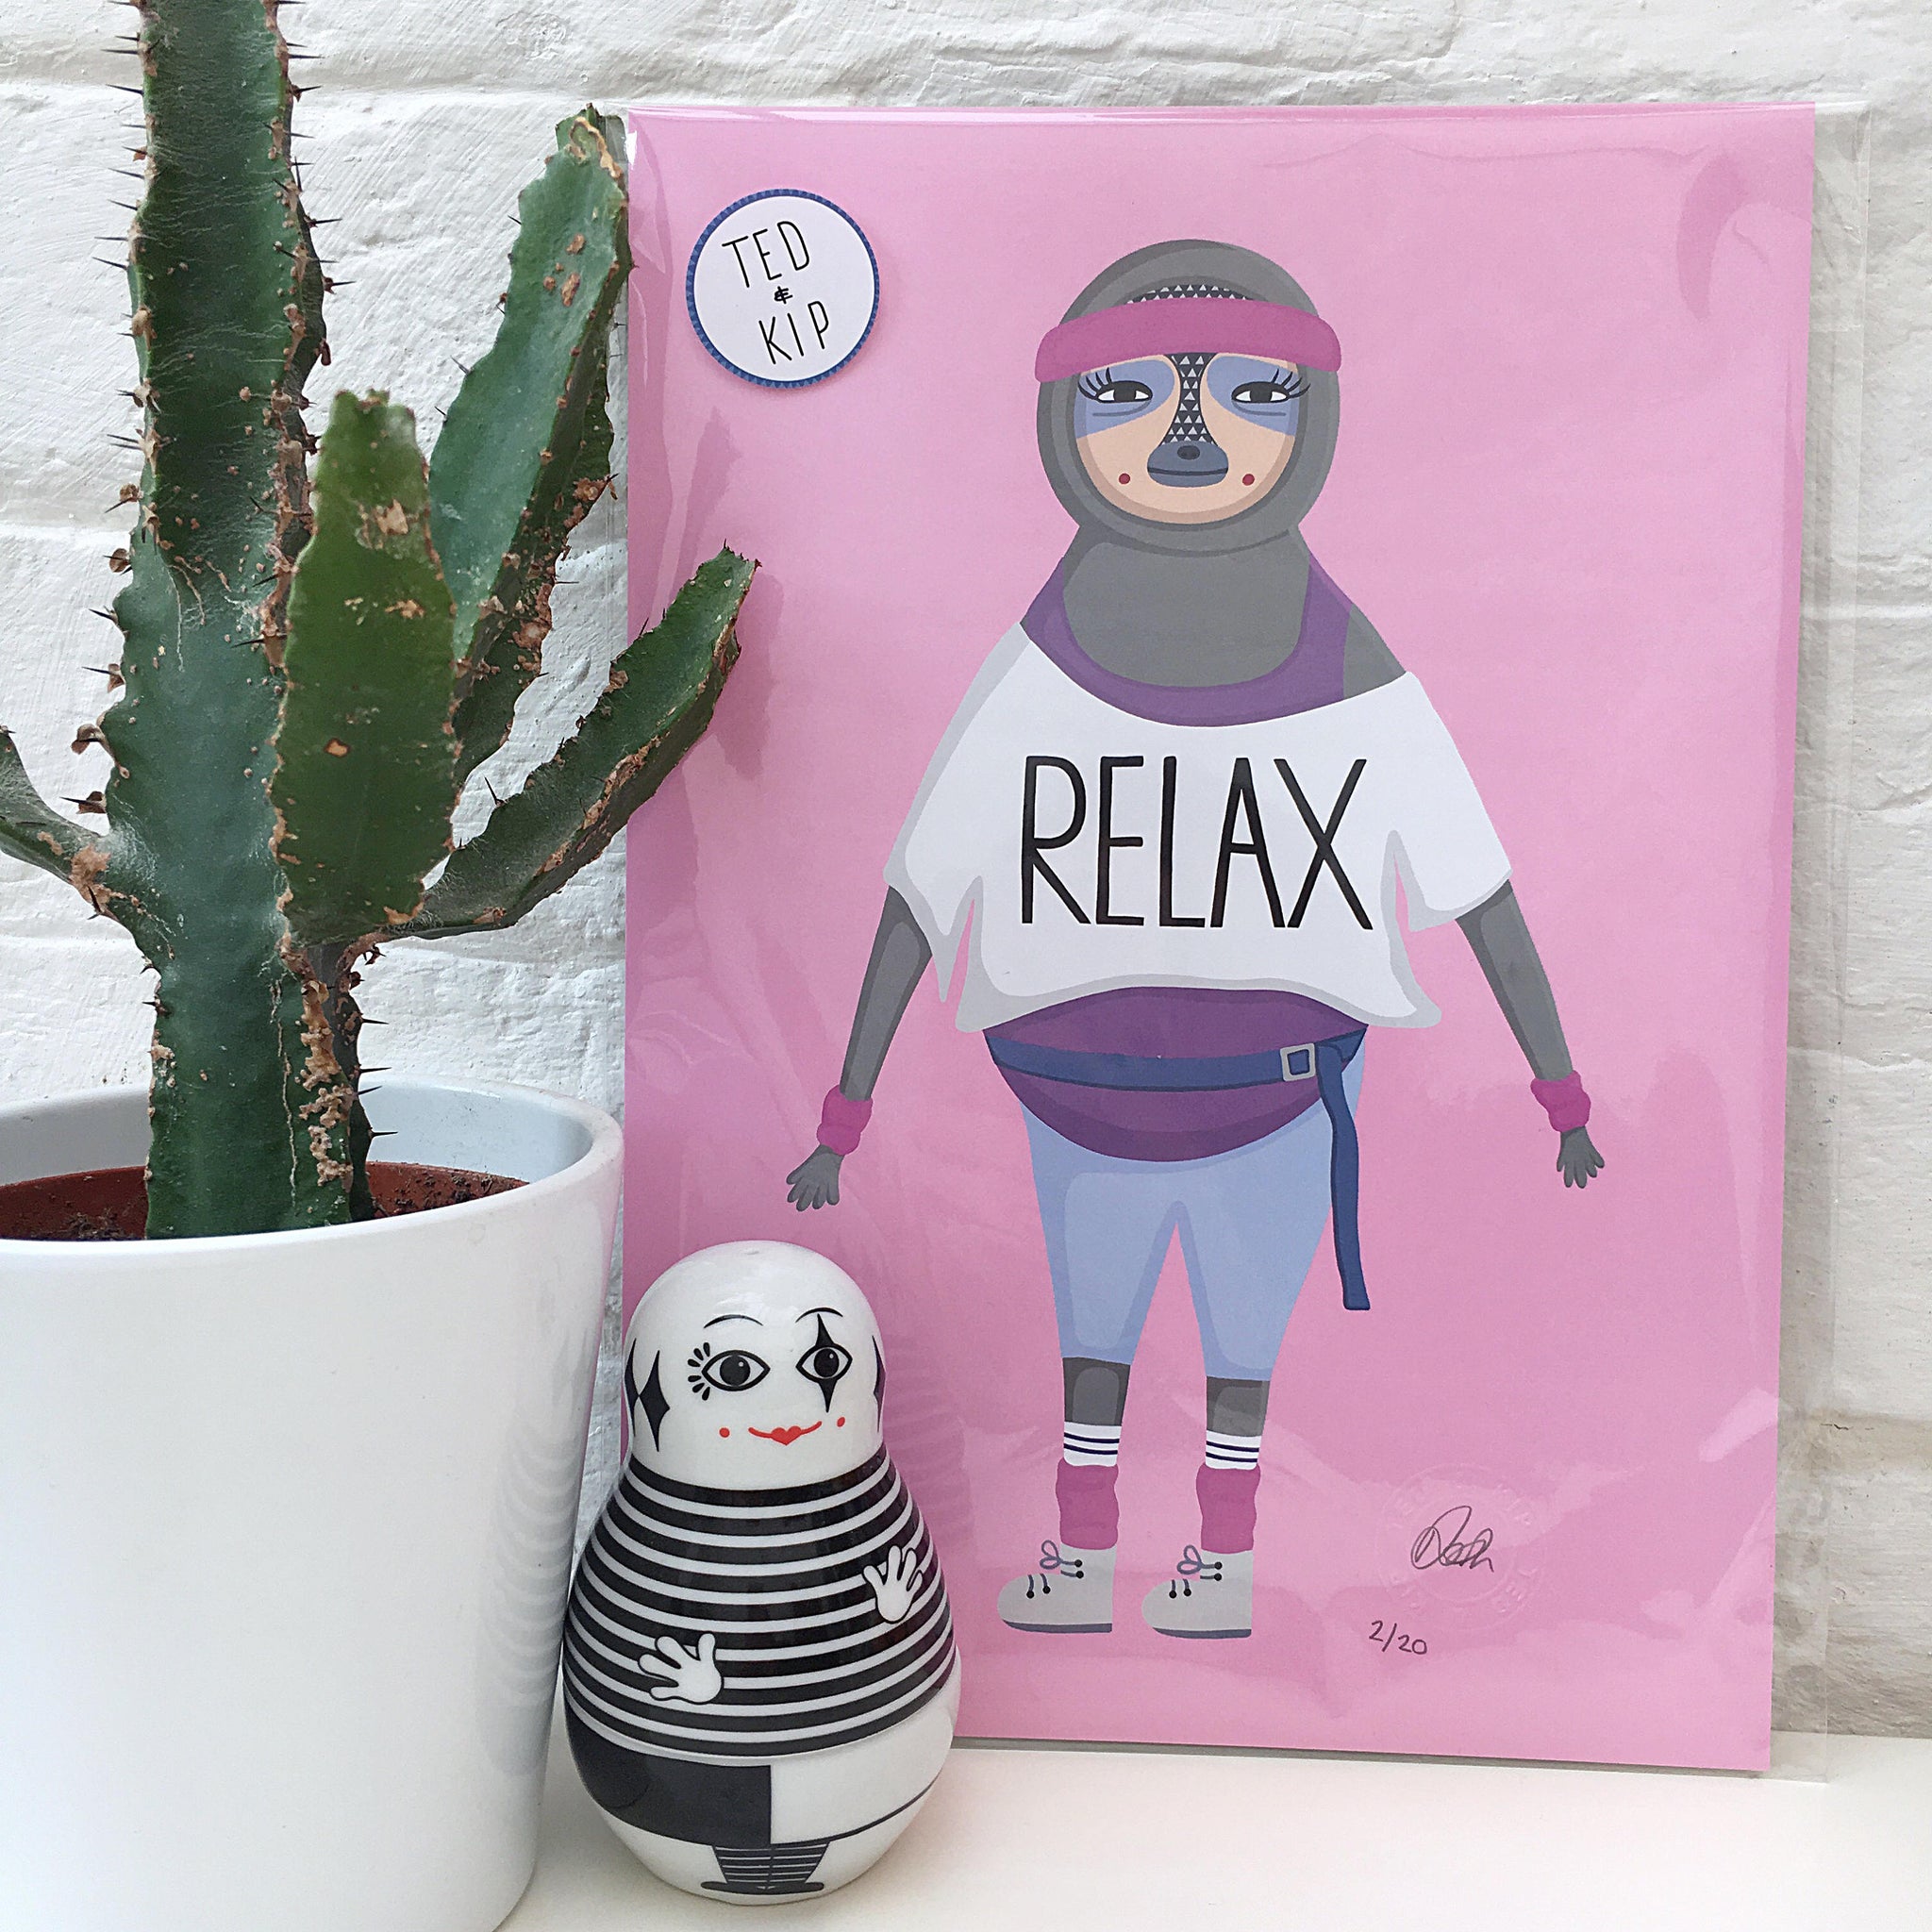 SALE Relax Sloth Print